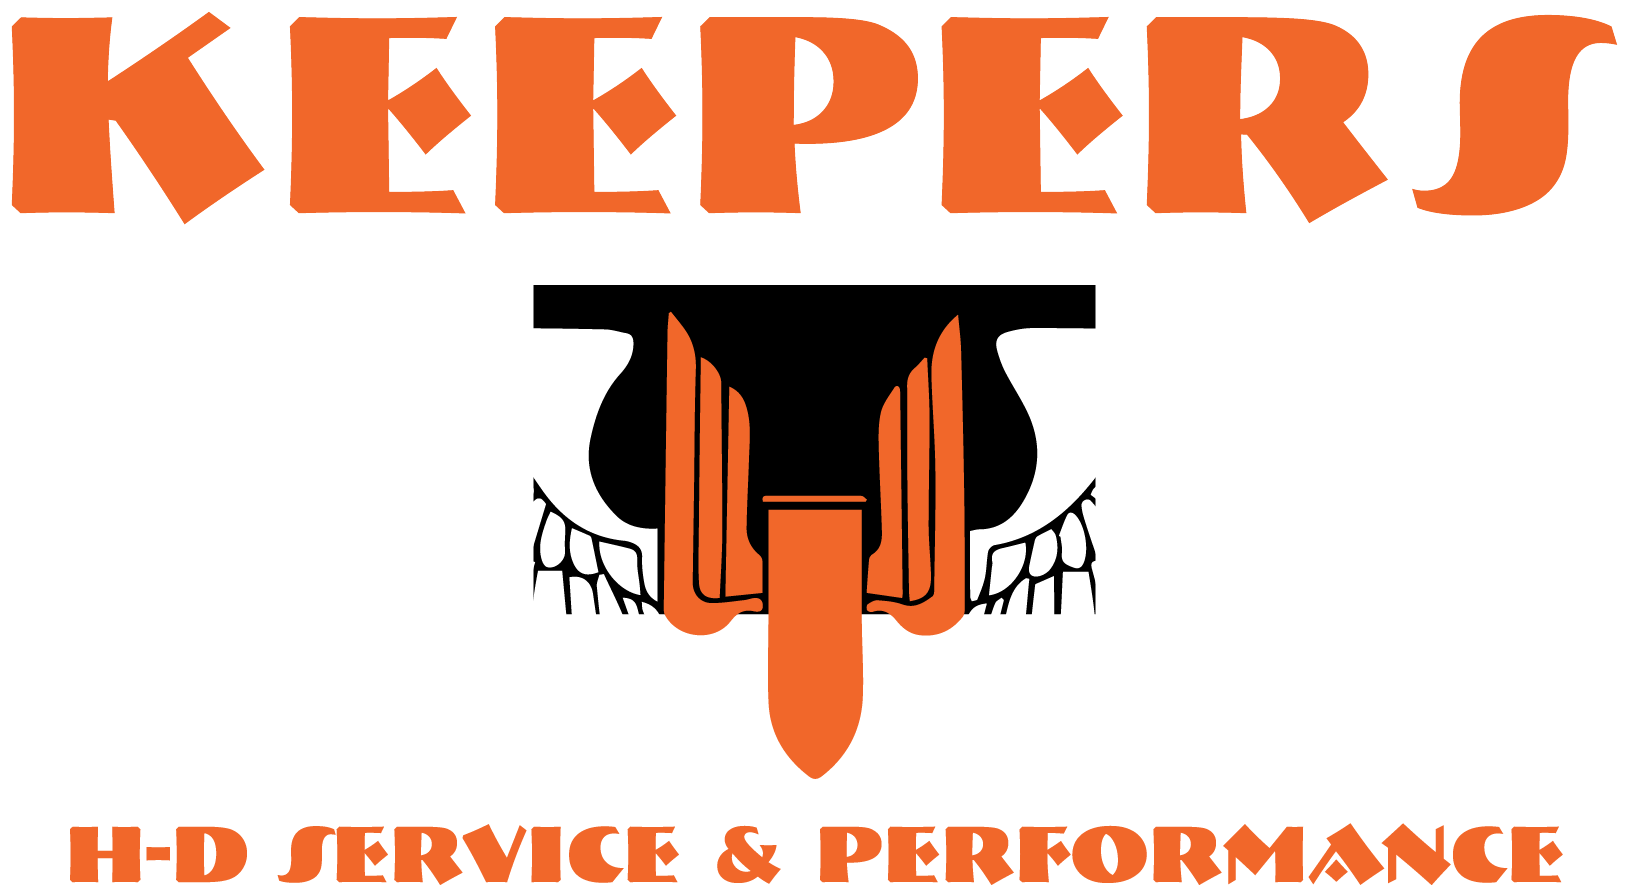 Keepers H-D Service & Performance, Kingman, Arizona